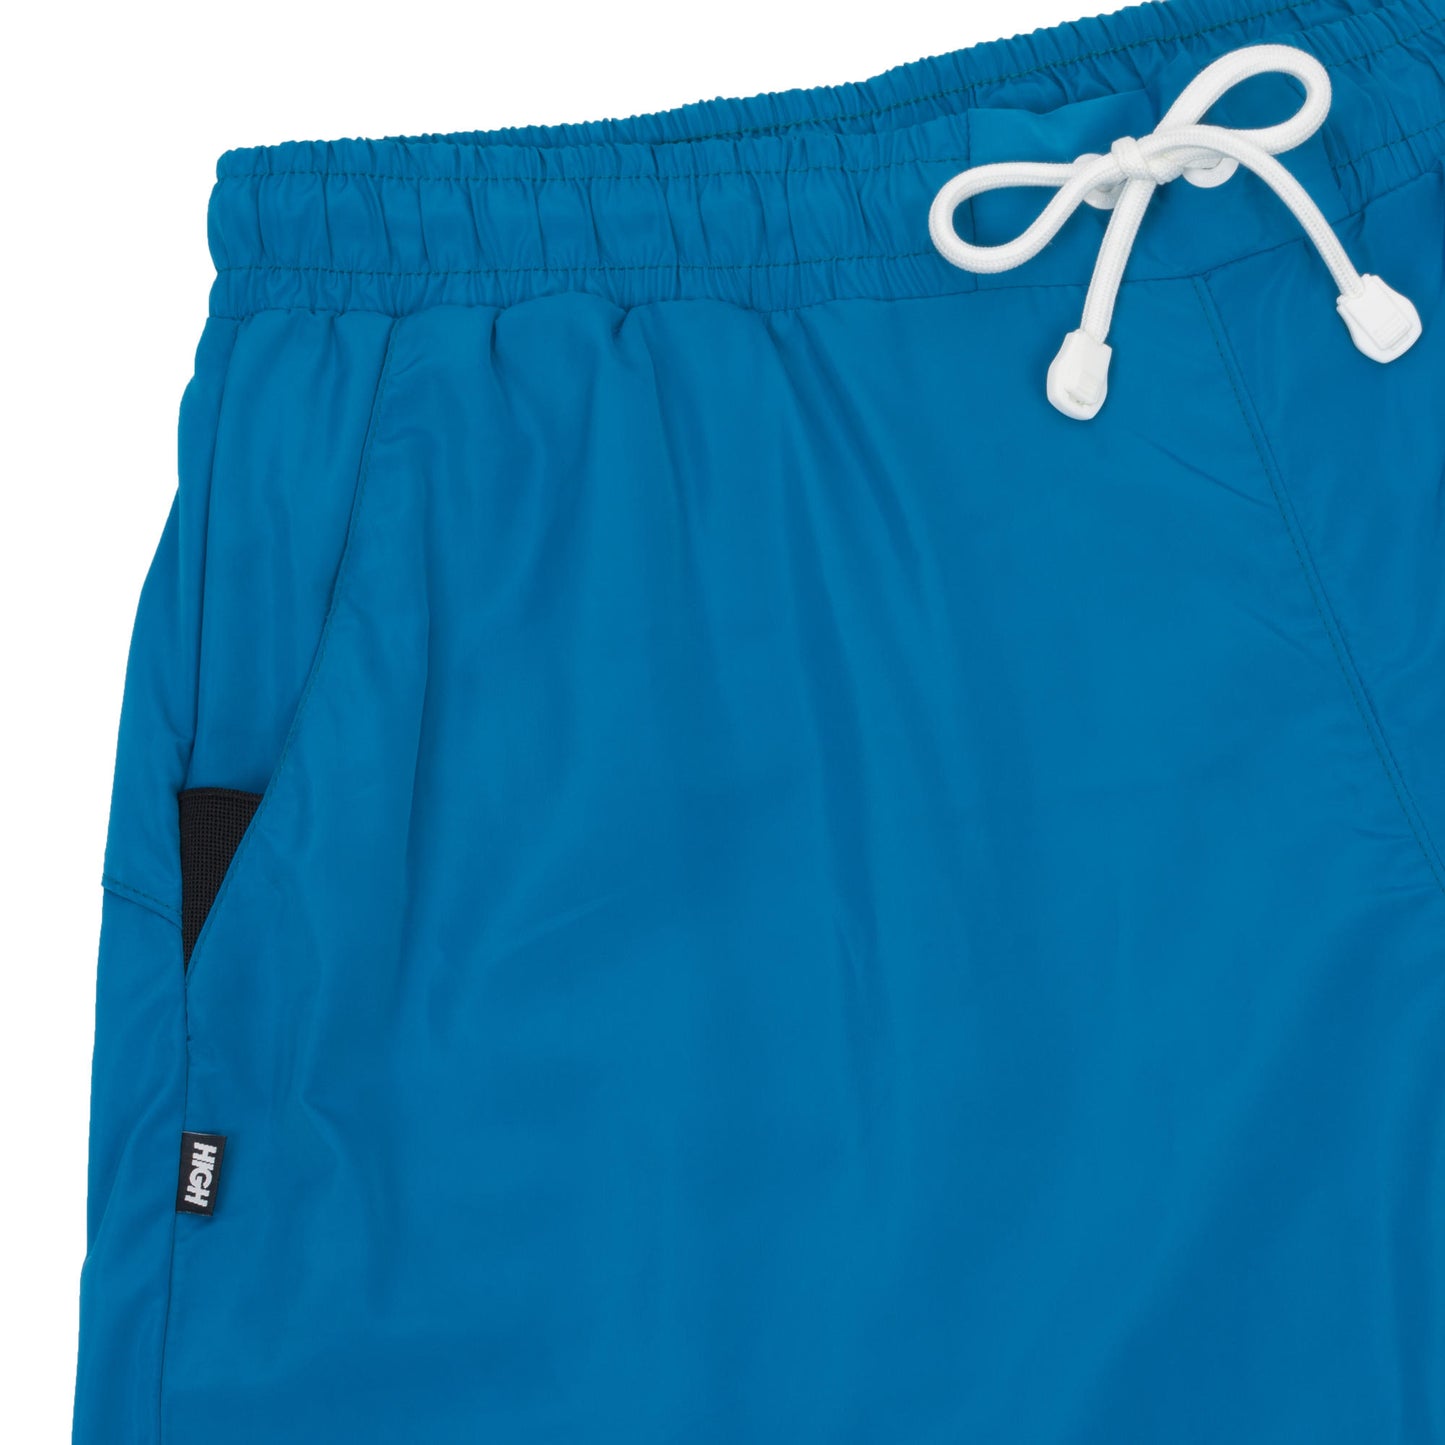 Shorts Agace Light Blue